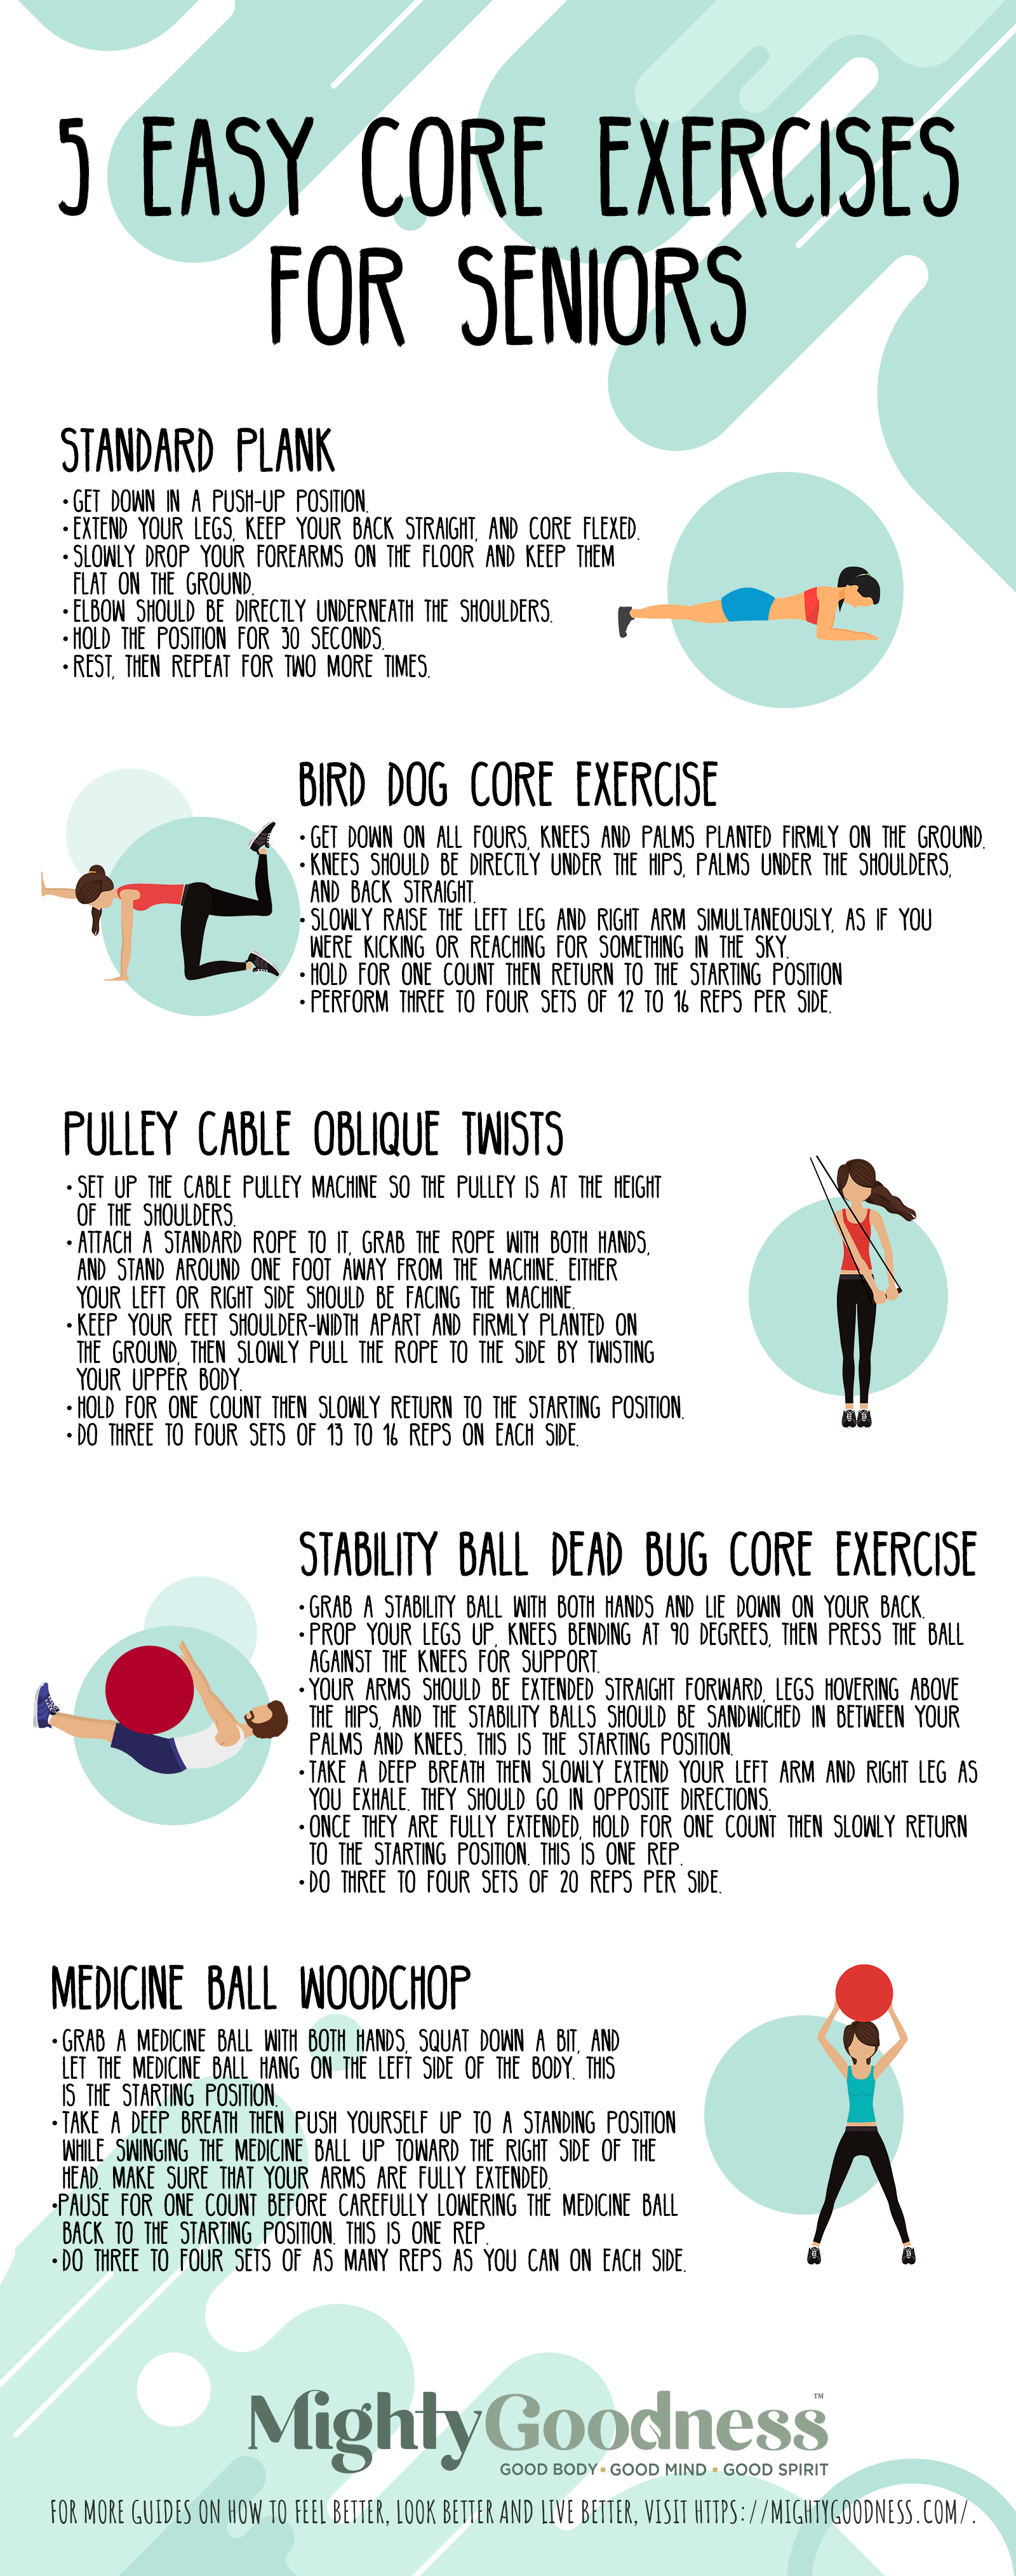 5 Easy Core Exercises for Seniors